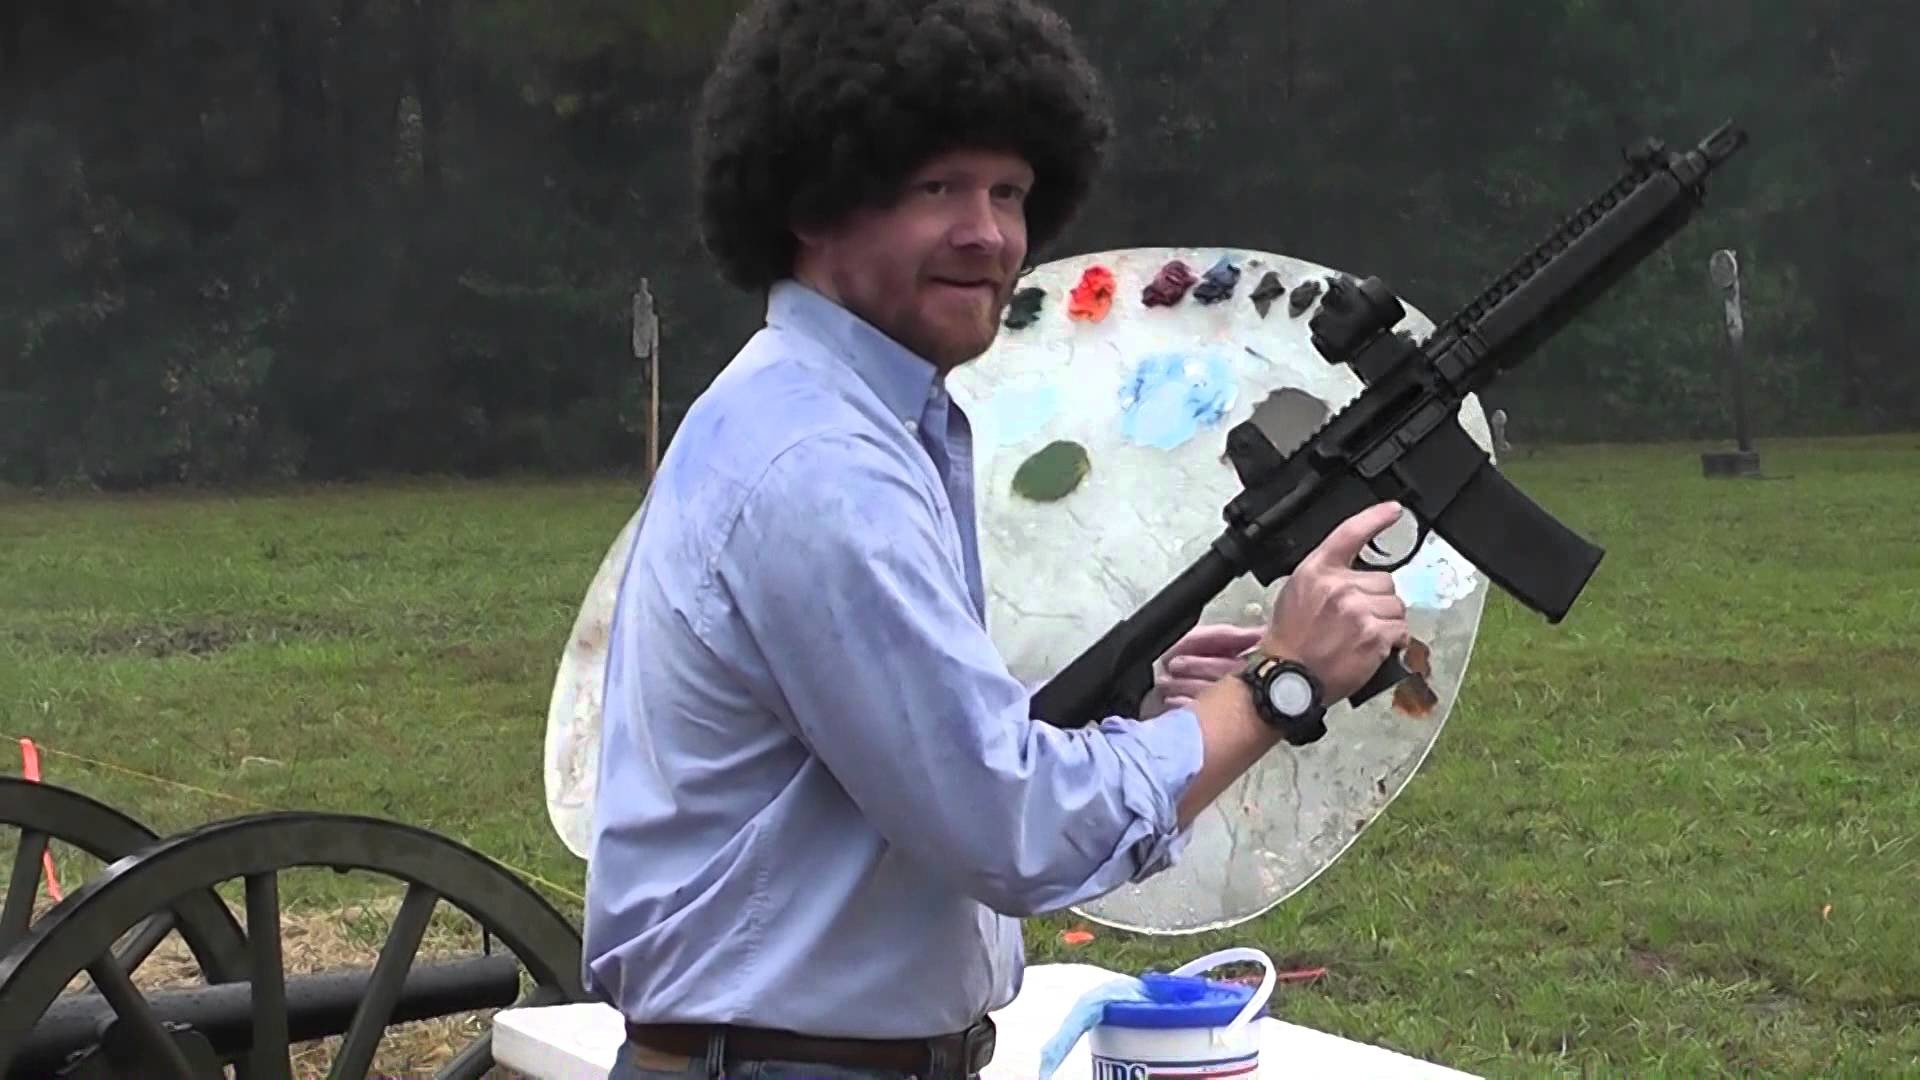 1920x1080 Bob Ross (Rob Boss) Shoots Machine Gun - IV8888 Range Day 2015 - YouTube